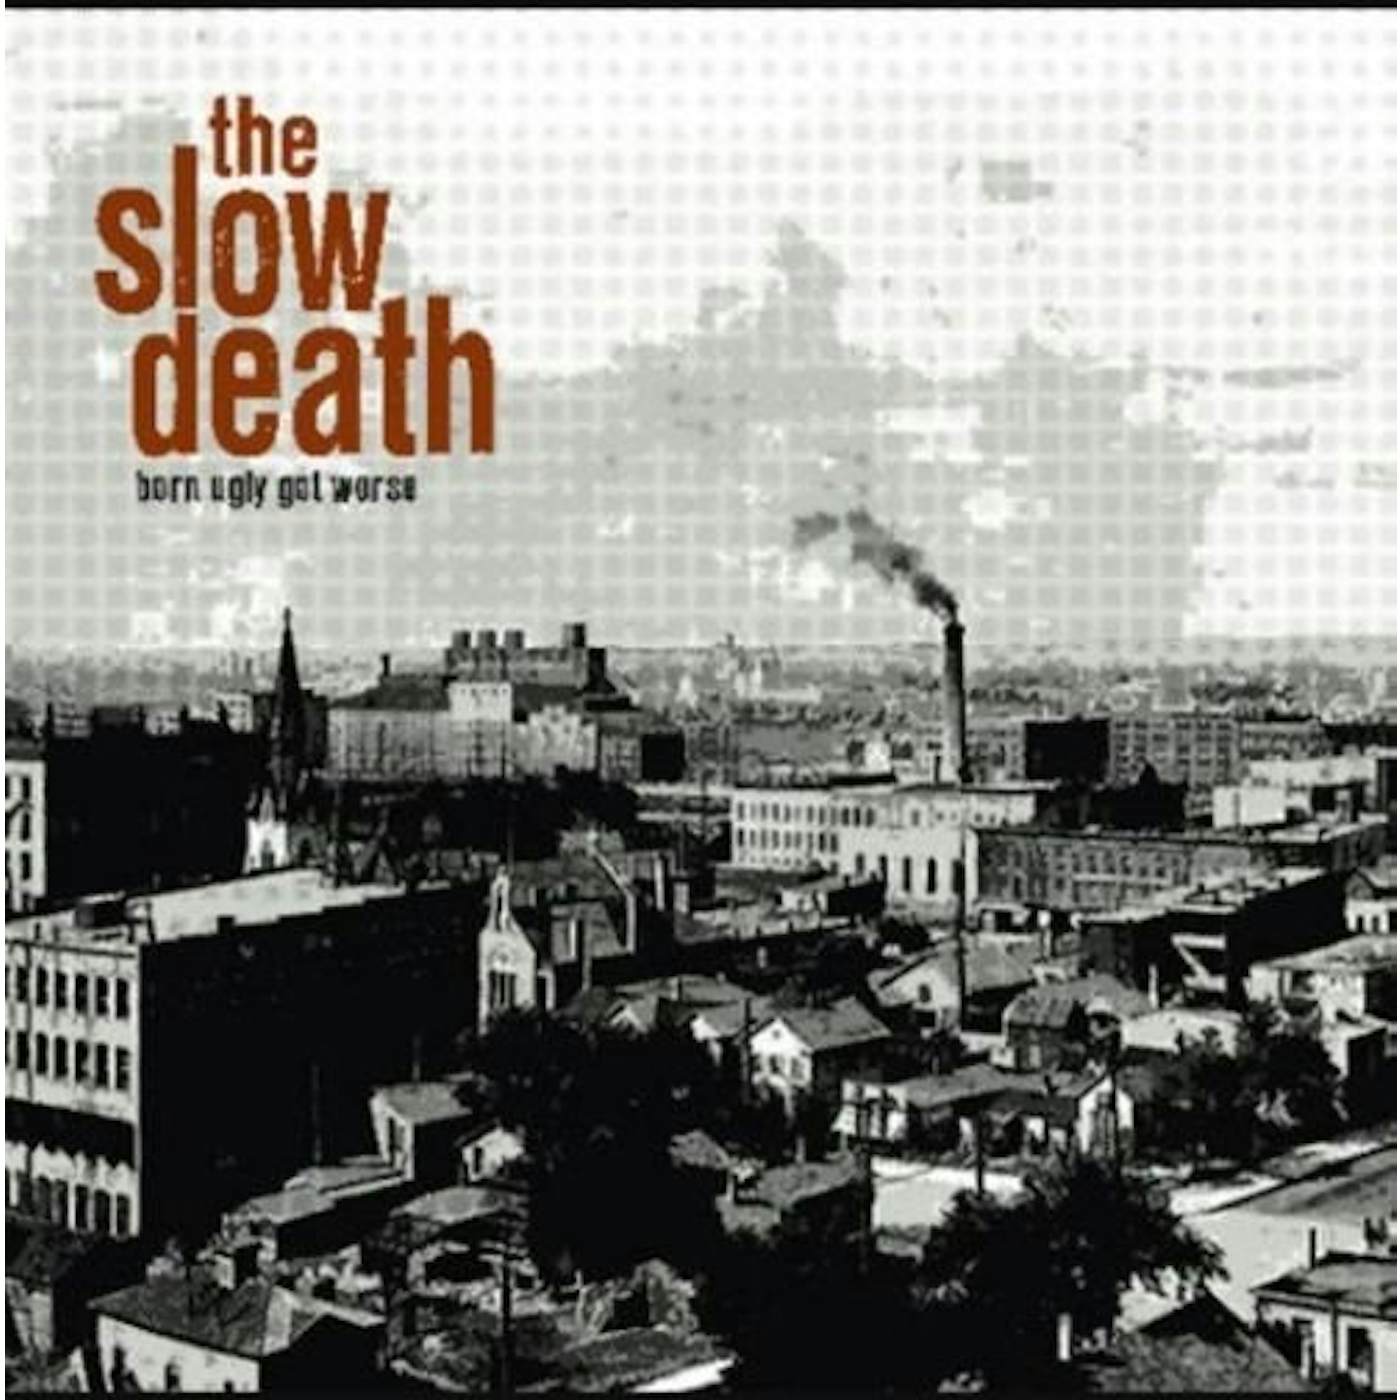 The Slow Death Born Ugly Got Worse Vinyl Record